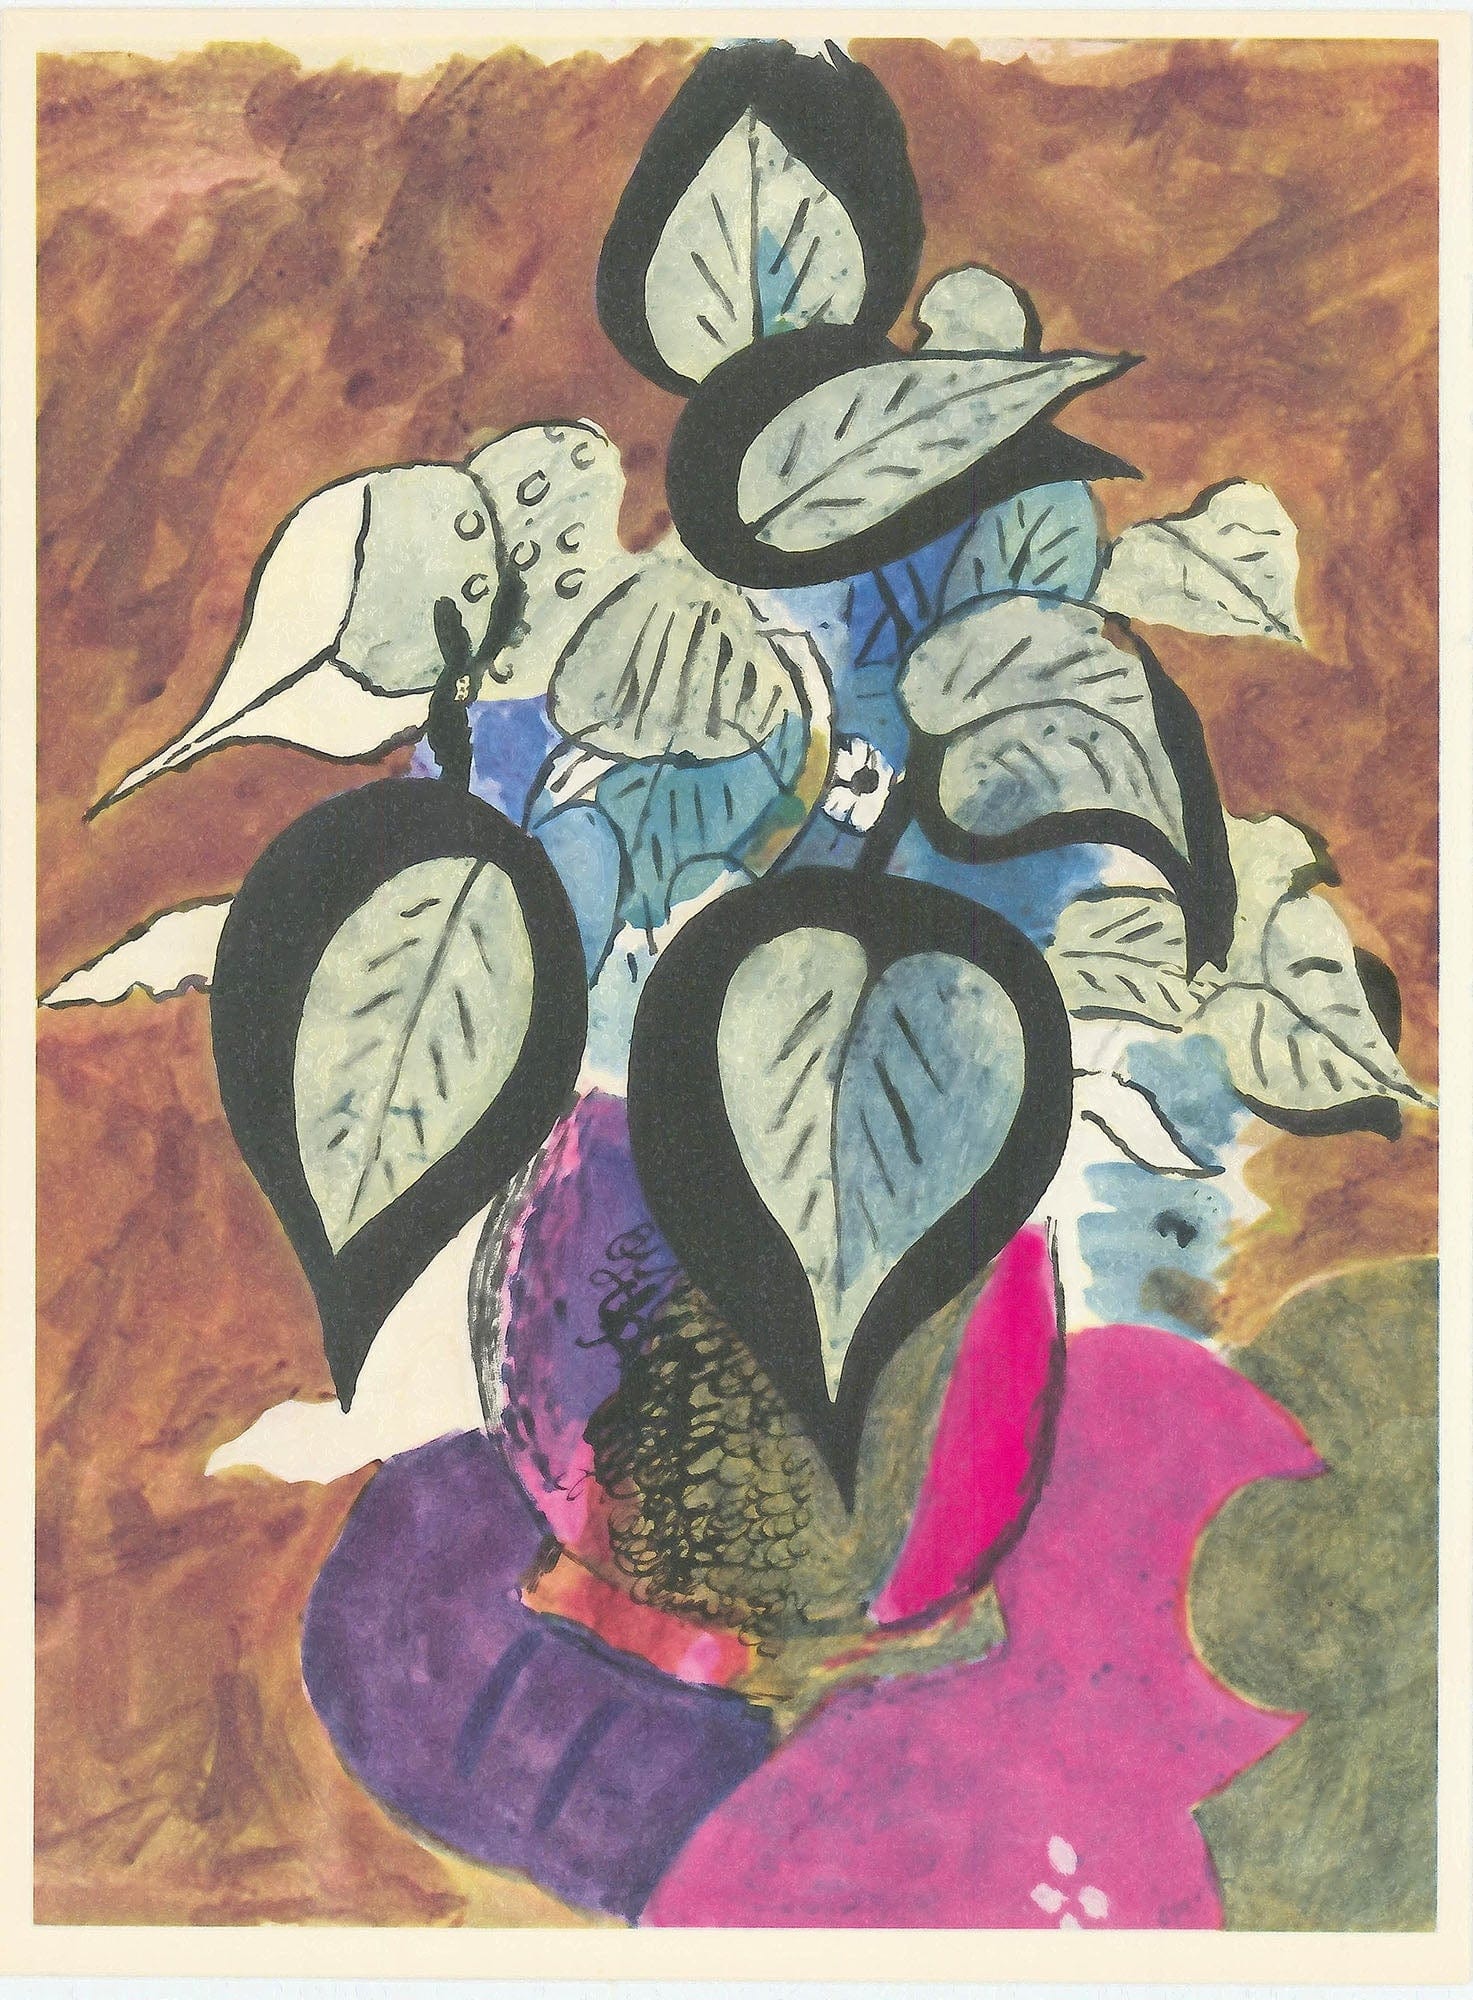 Georges Braque, "Untitled XVIII" ZOOM Vol. 8 No. 31 ET 32 verve lithograph